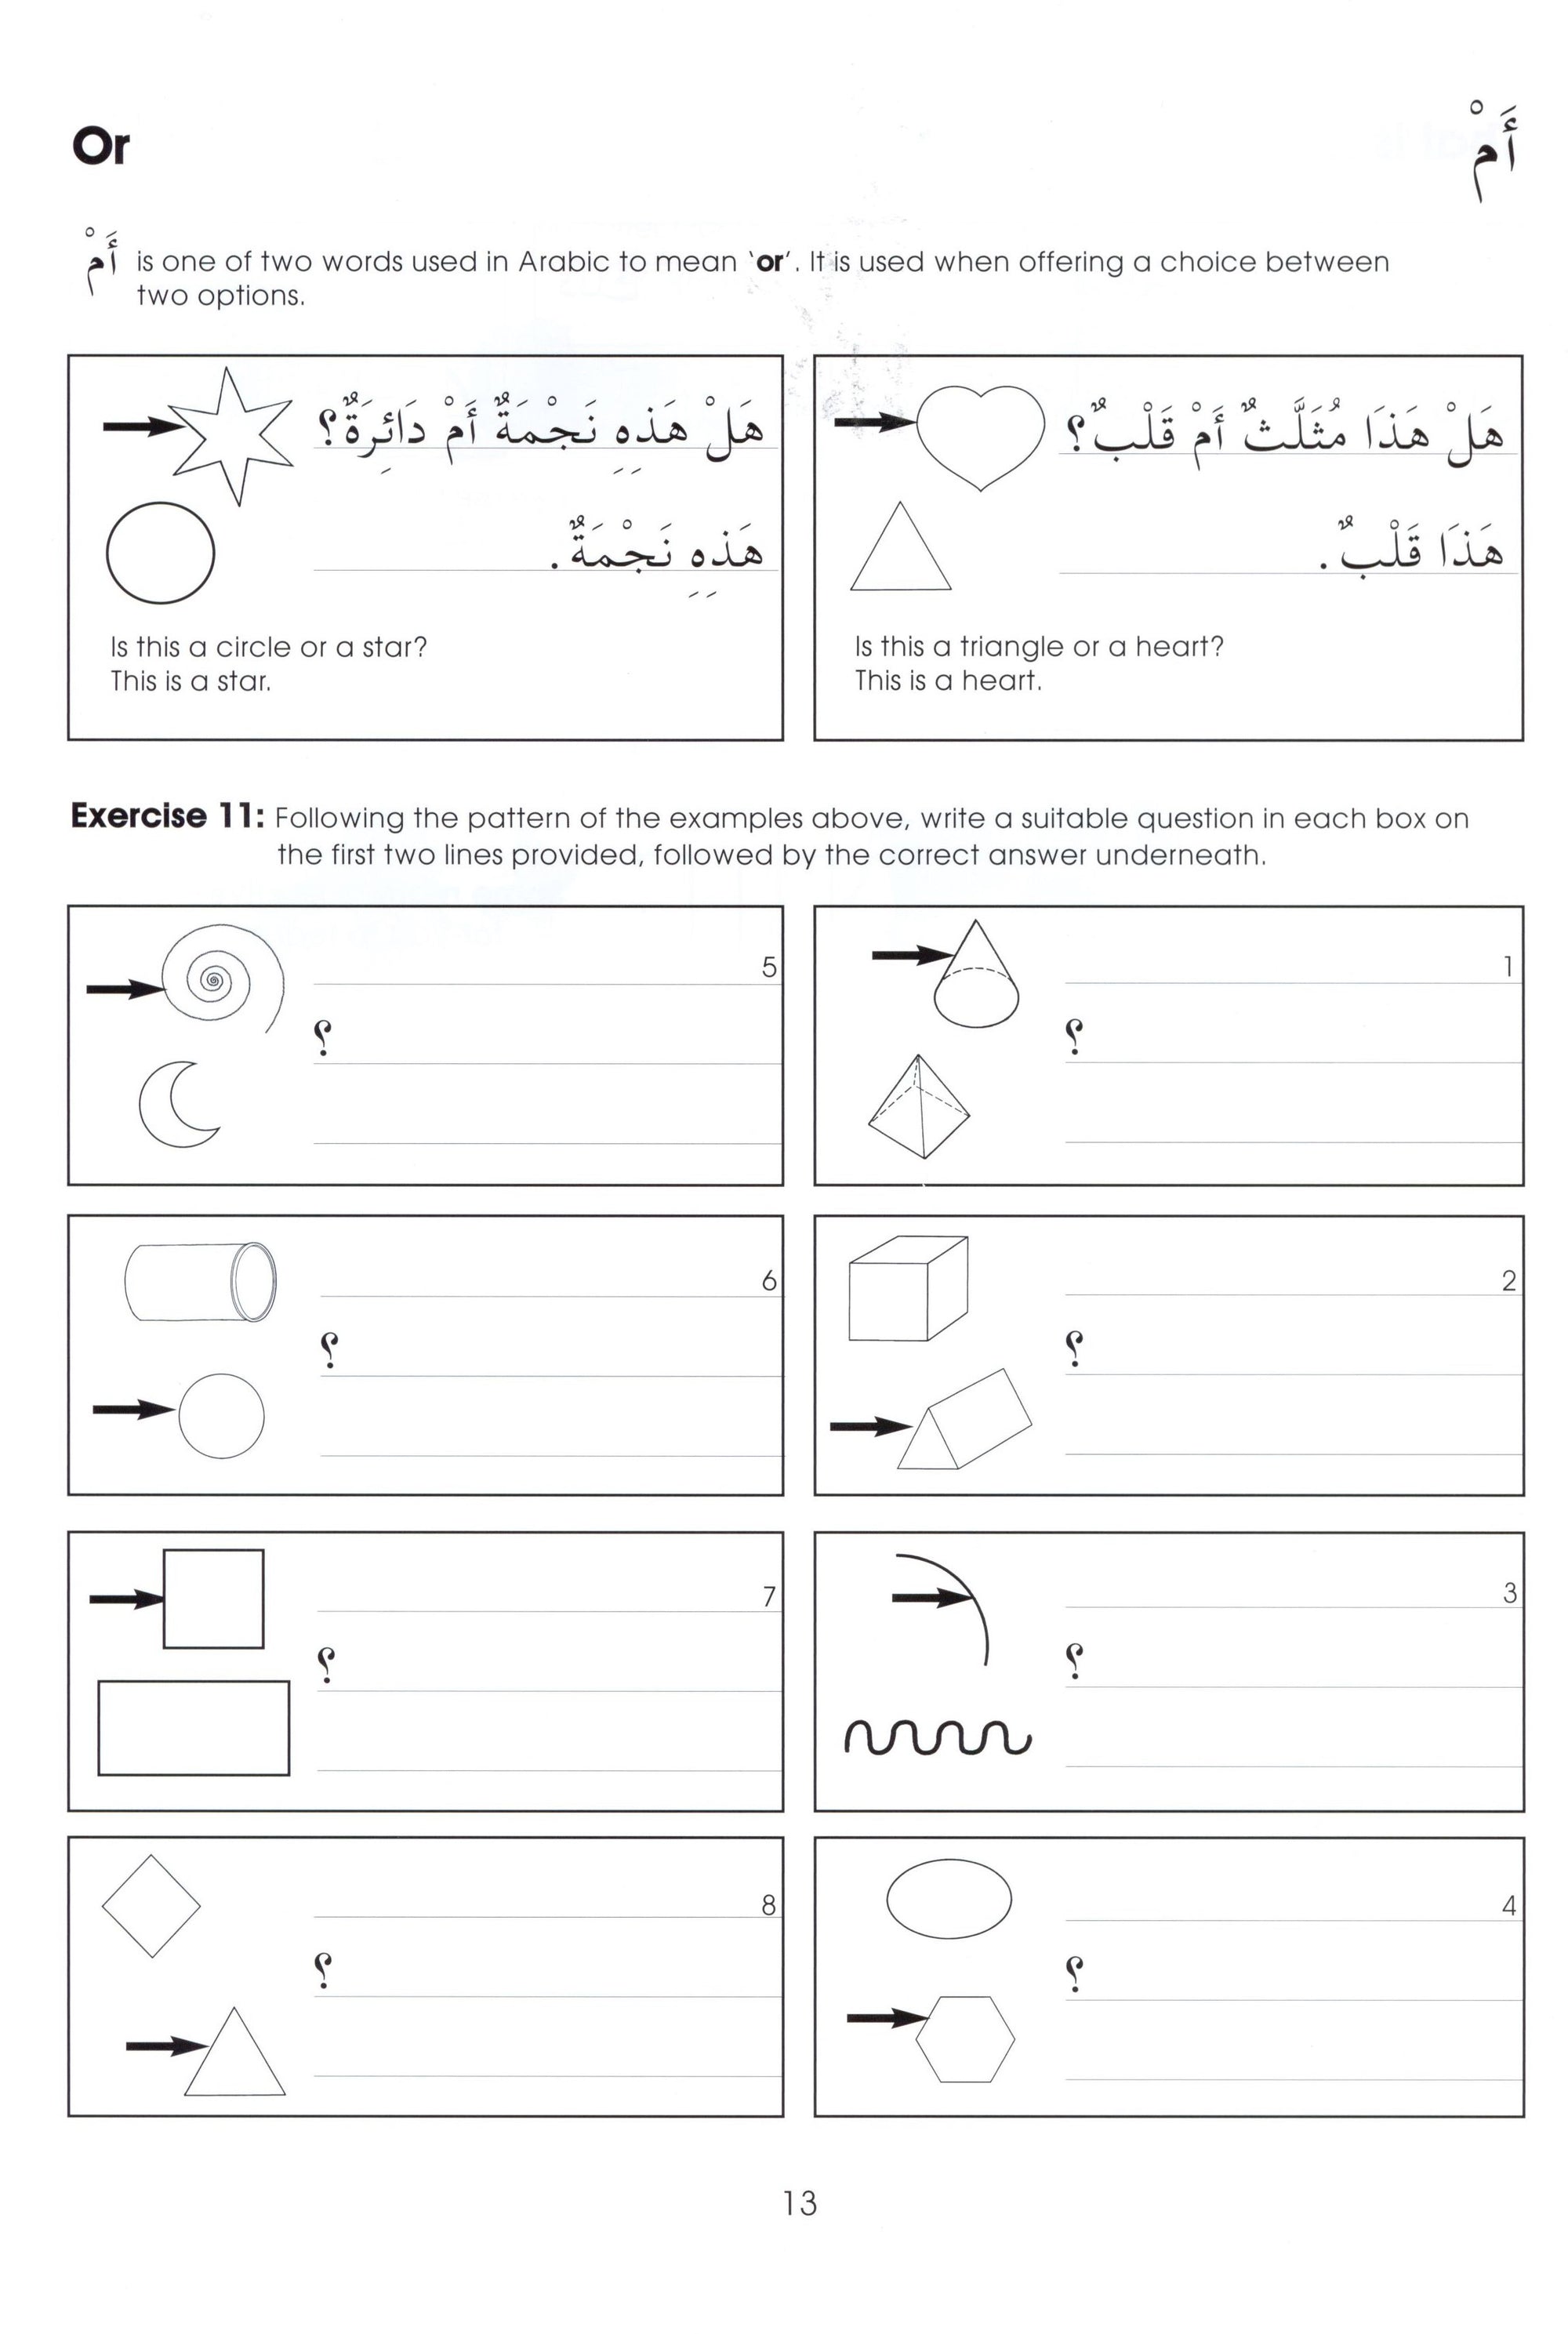 Gateway to Arabic Book 2 مفتاح العربية